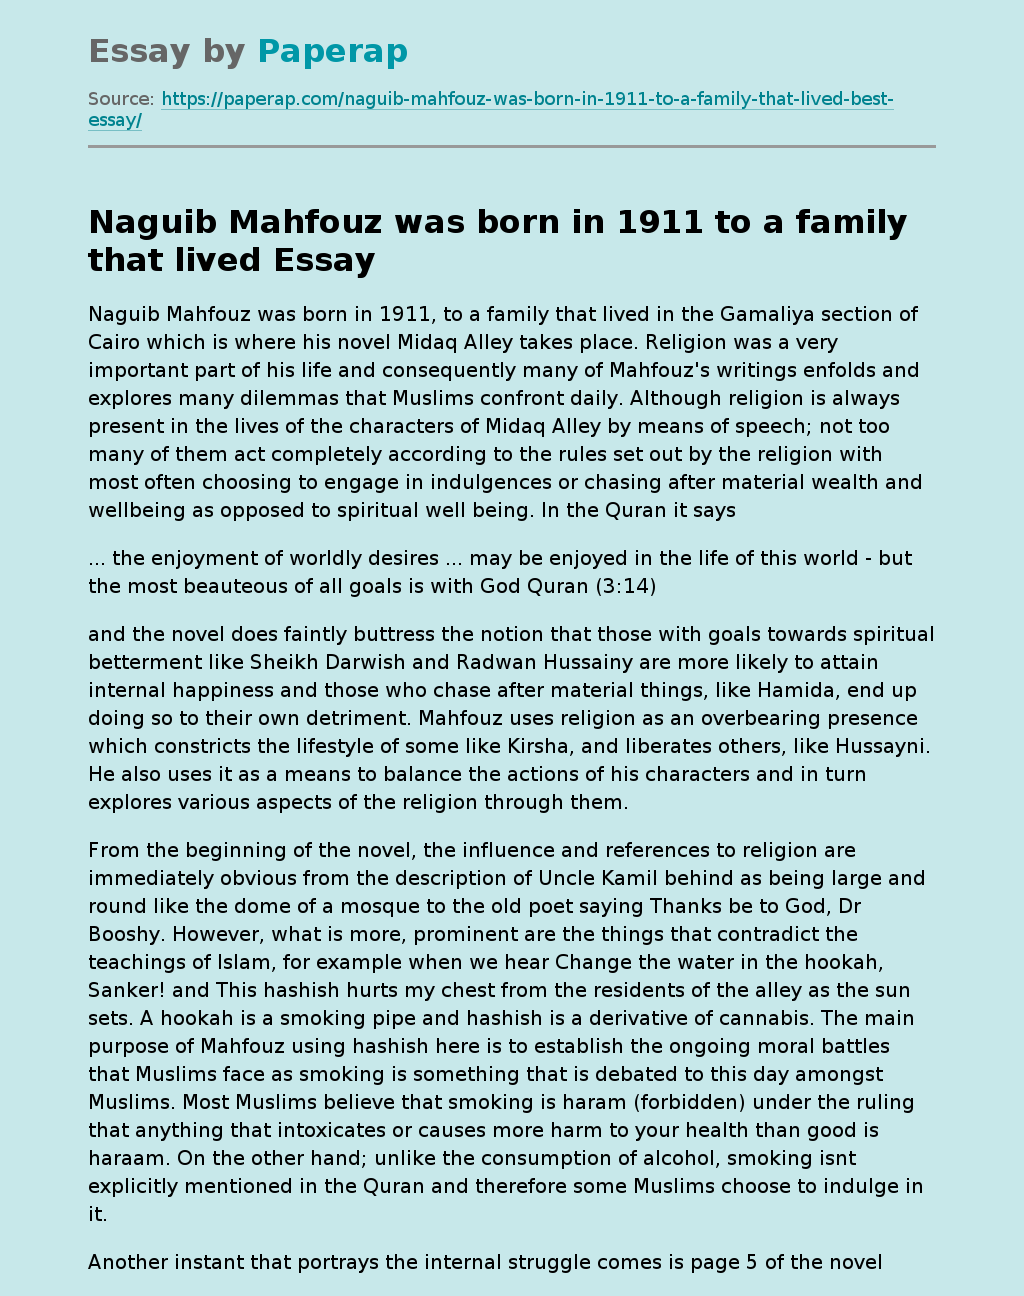 Egyptian Novelist and Screenwriter Naguib Mahfouz